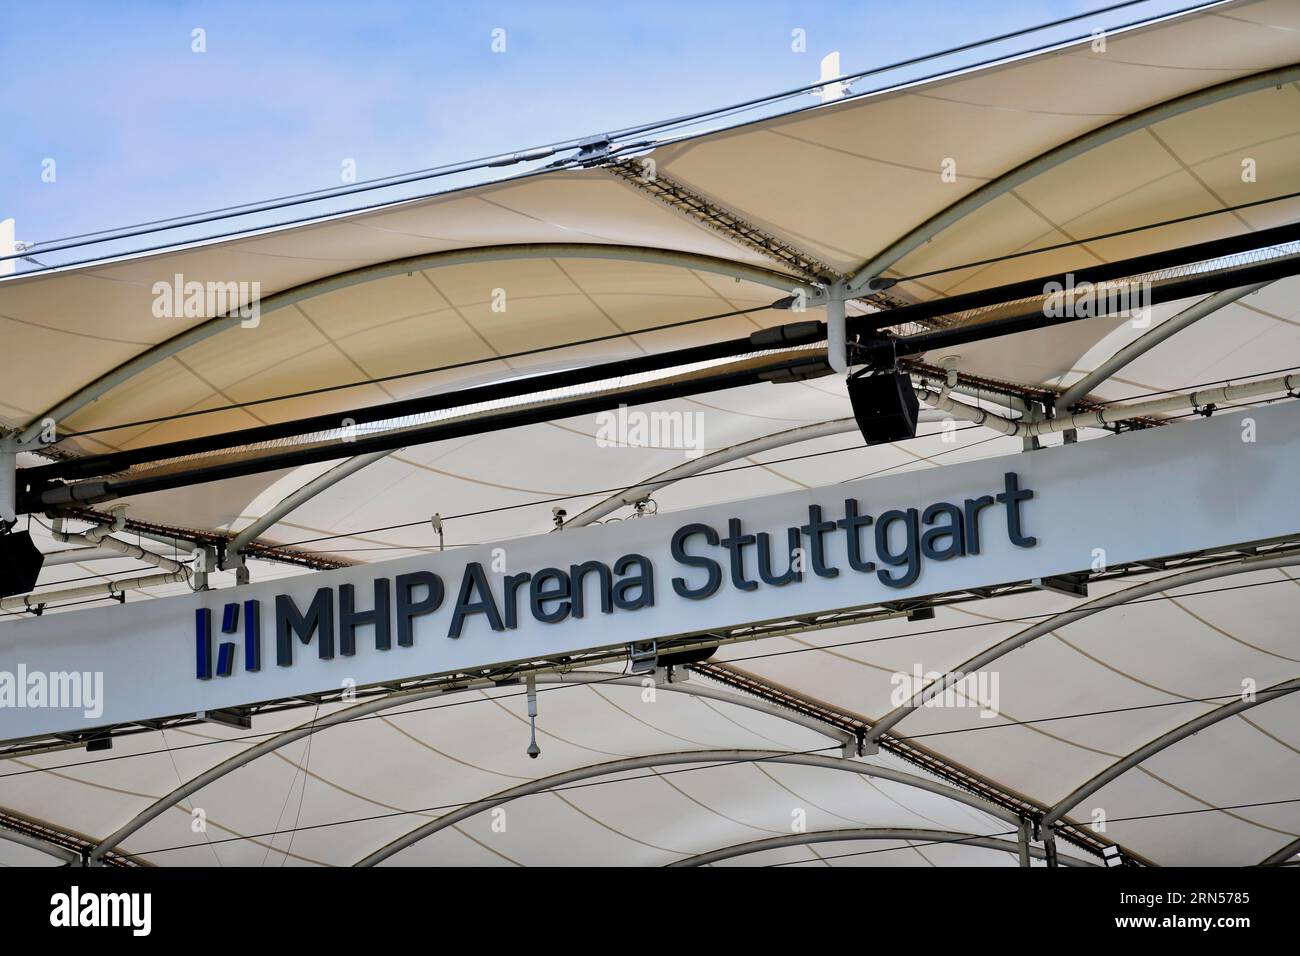 Nouveau logo du MHPArena, Stuttgart, Baden-Wuerttemberg, Allemagne Banque D'Images